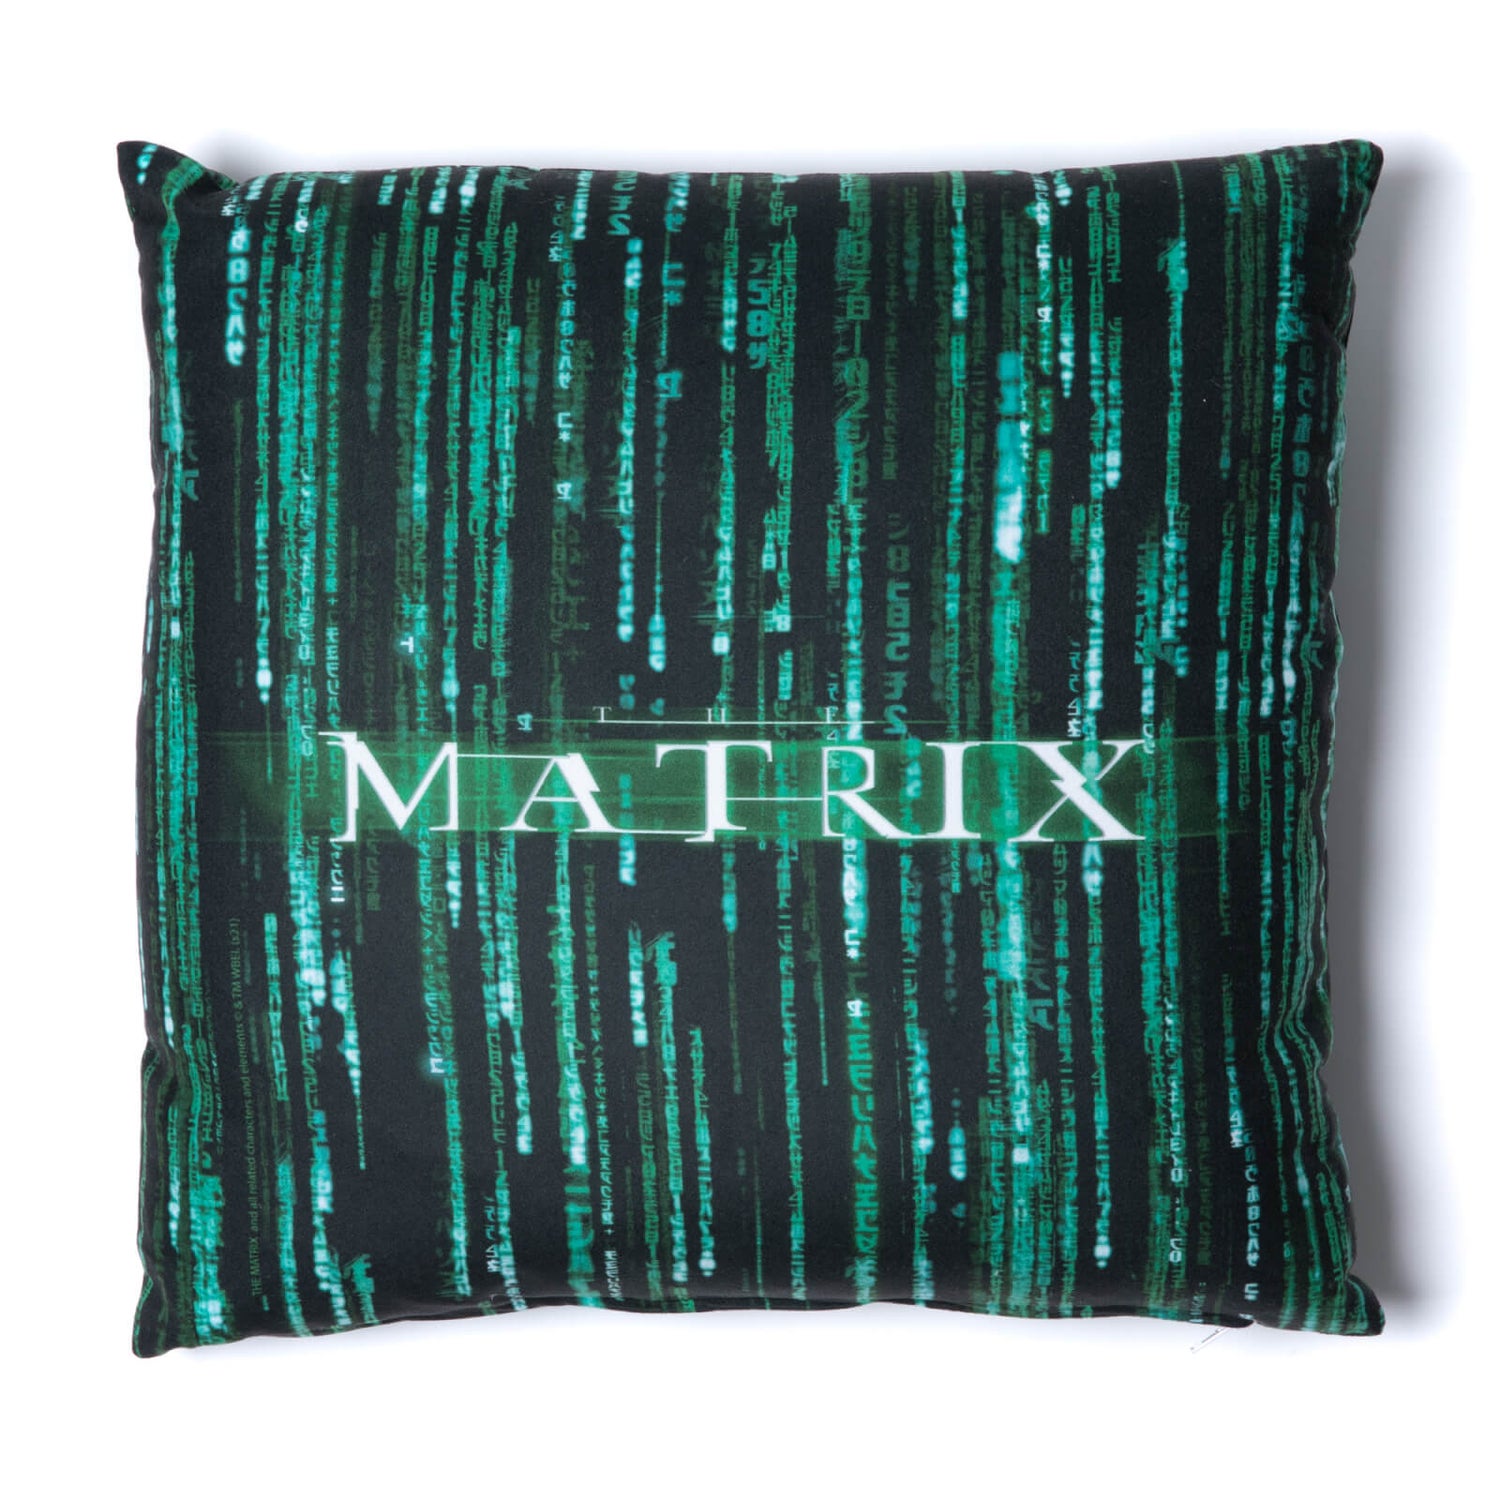 The Matrix Square Cushion